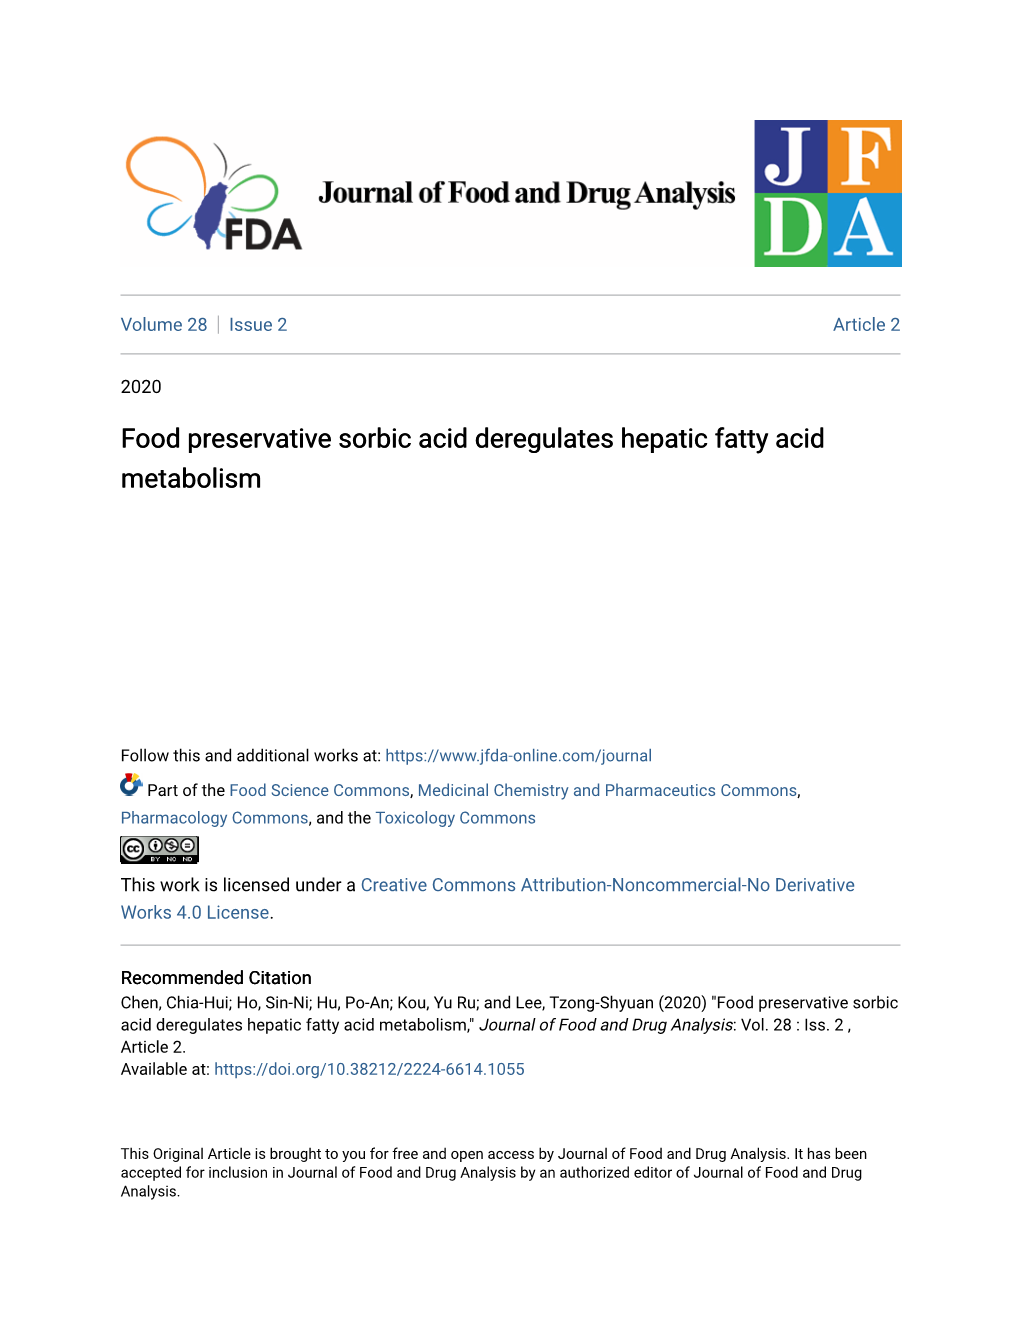 Food Preservative Sorbic Acid Deregulates Hepatic Fatty Acid Metabolism